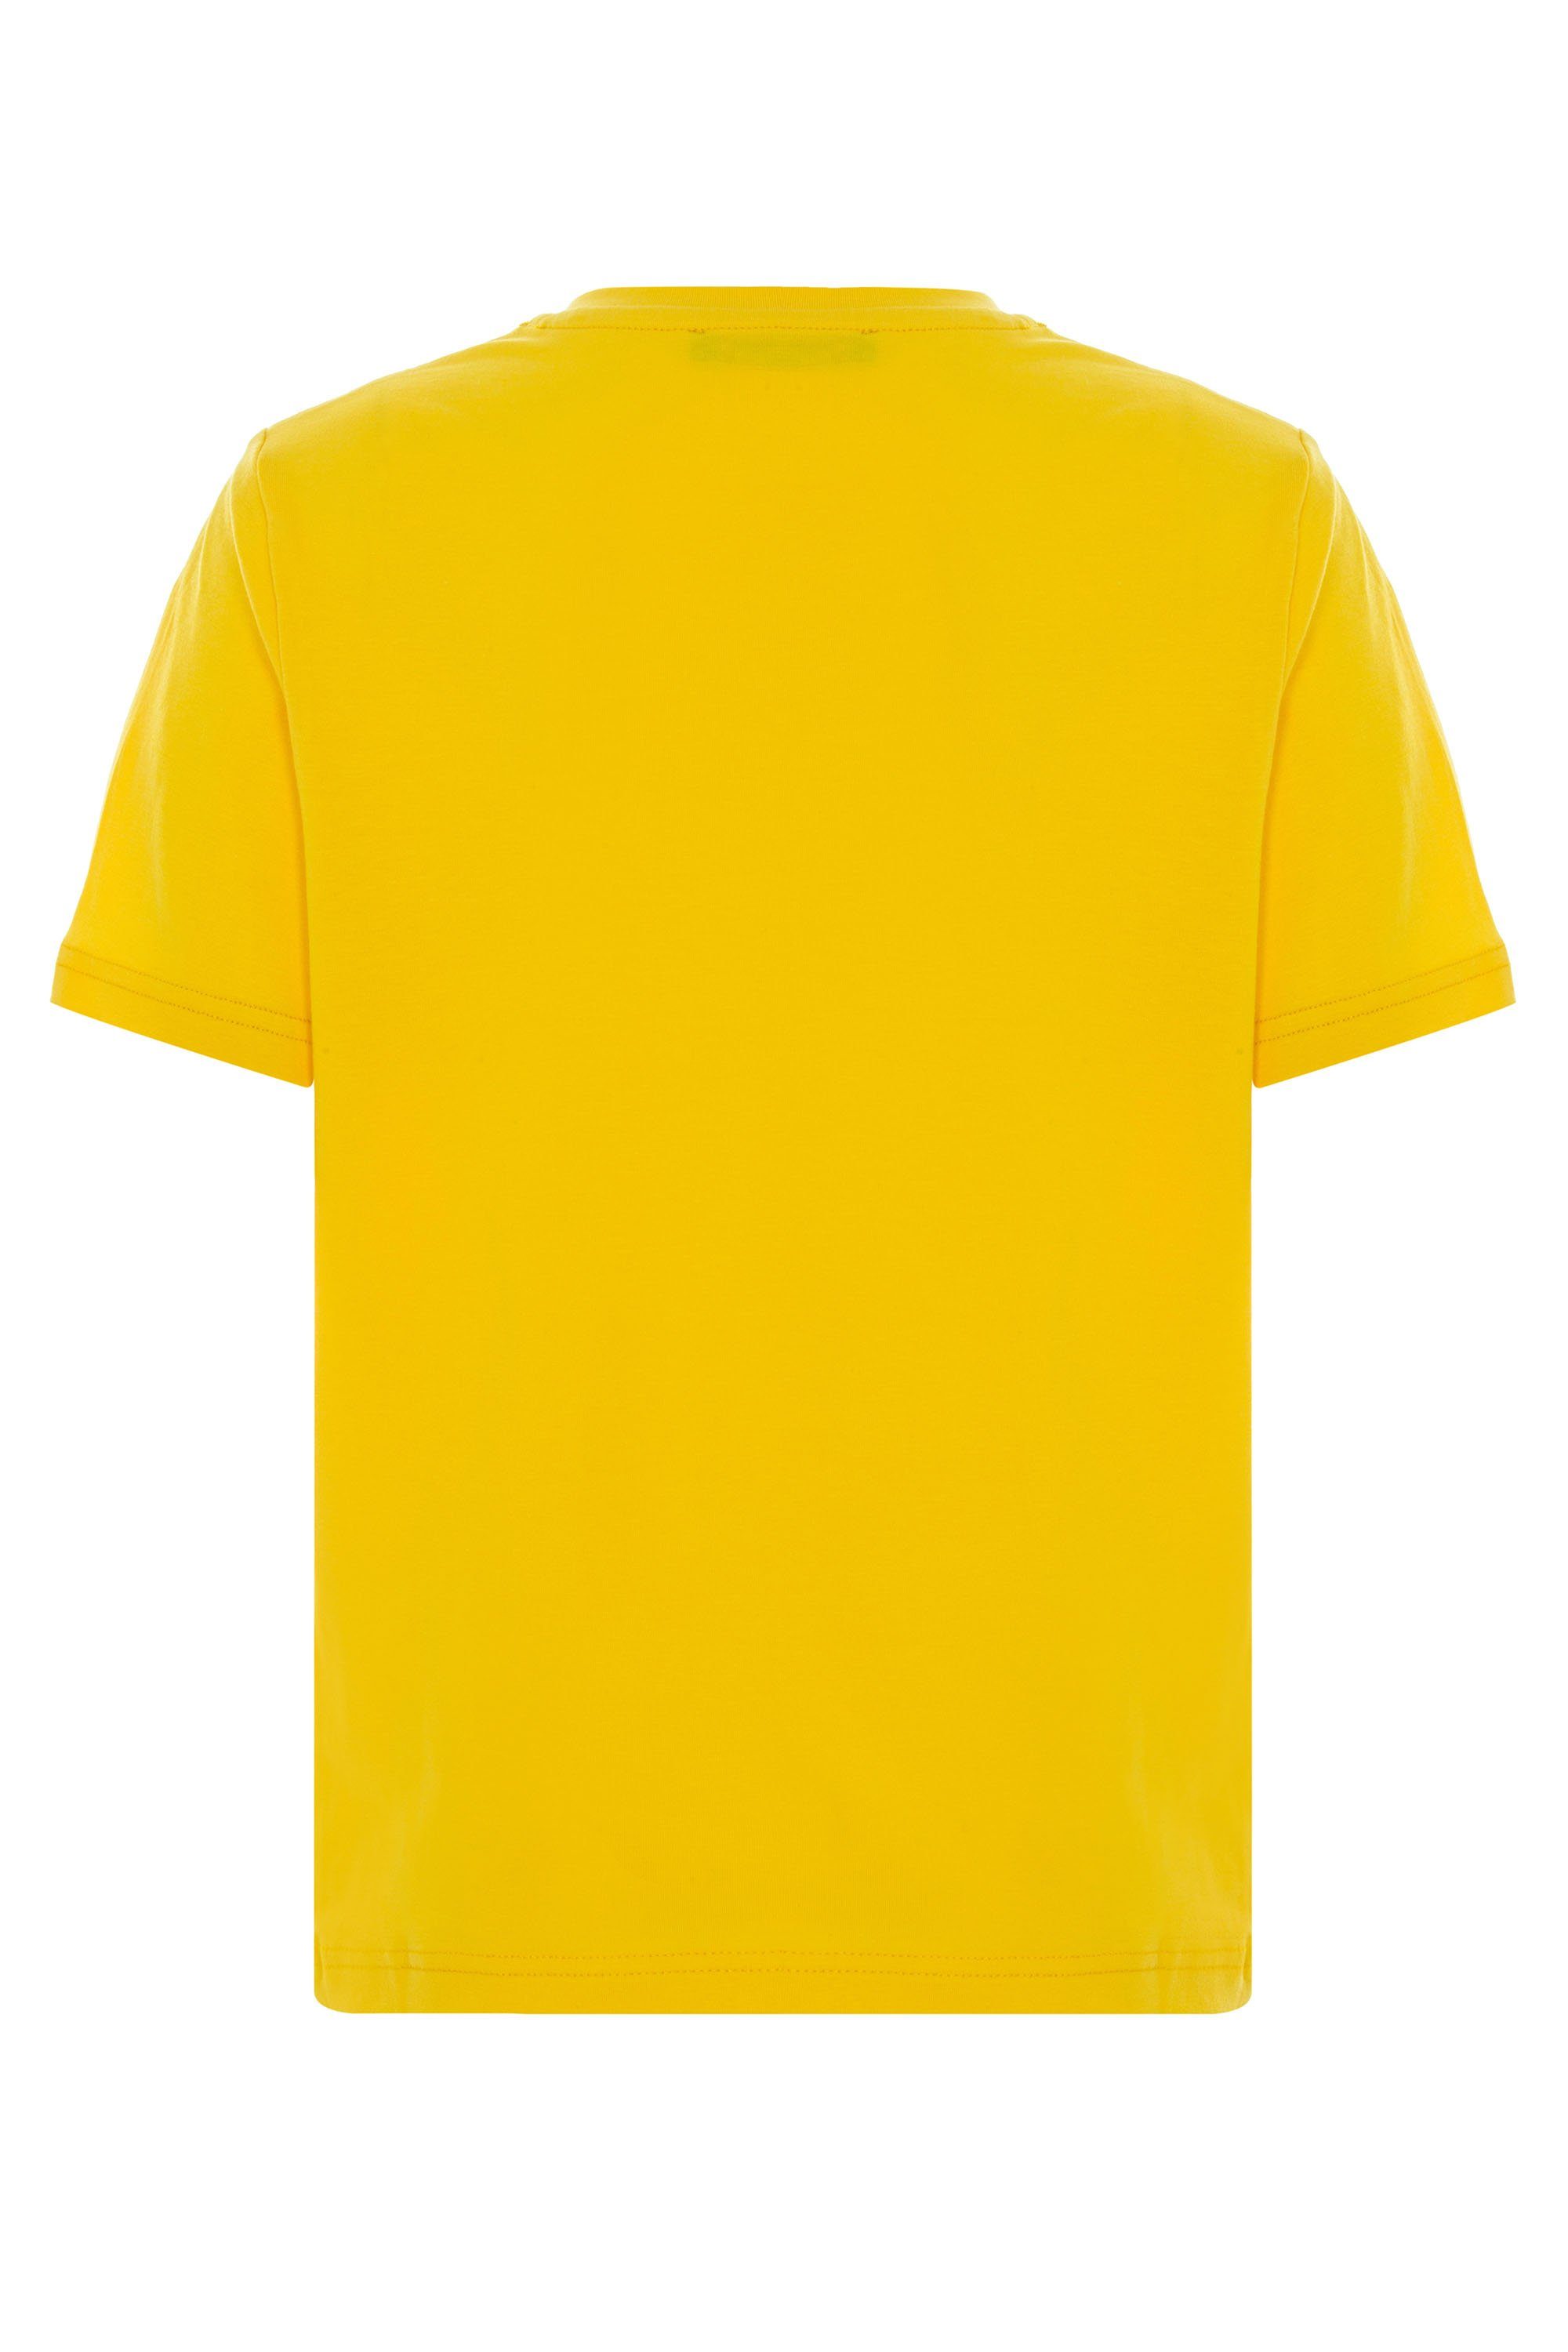 Cipo coolem T-Shirt mit Baxx gelb-schwarz & Print